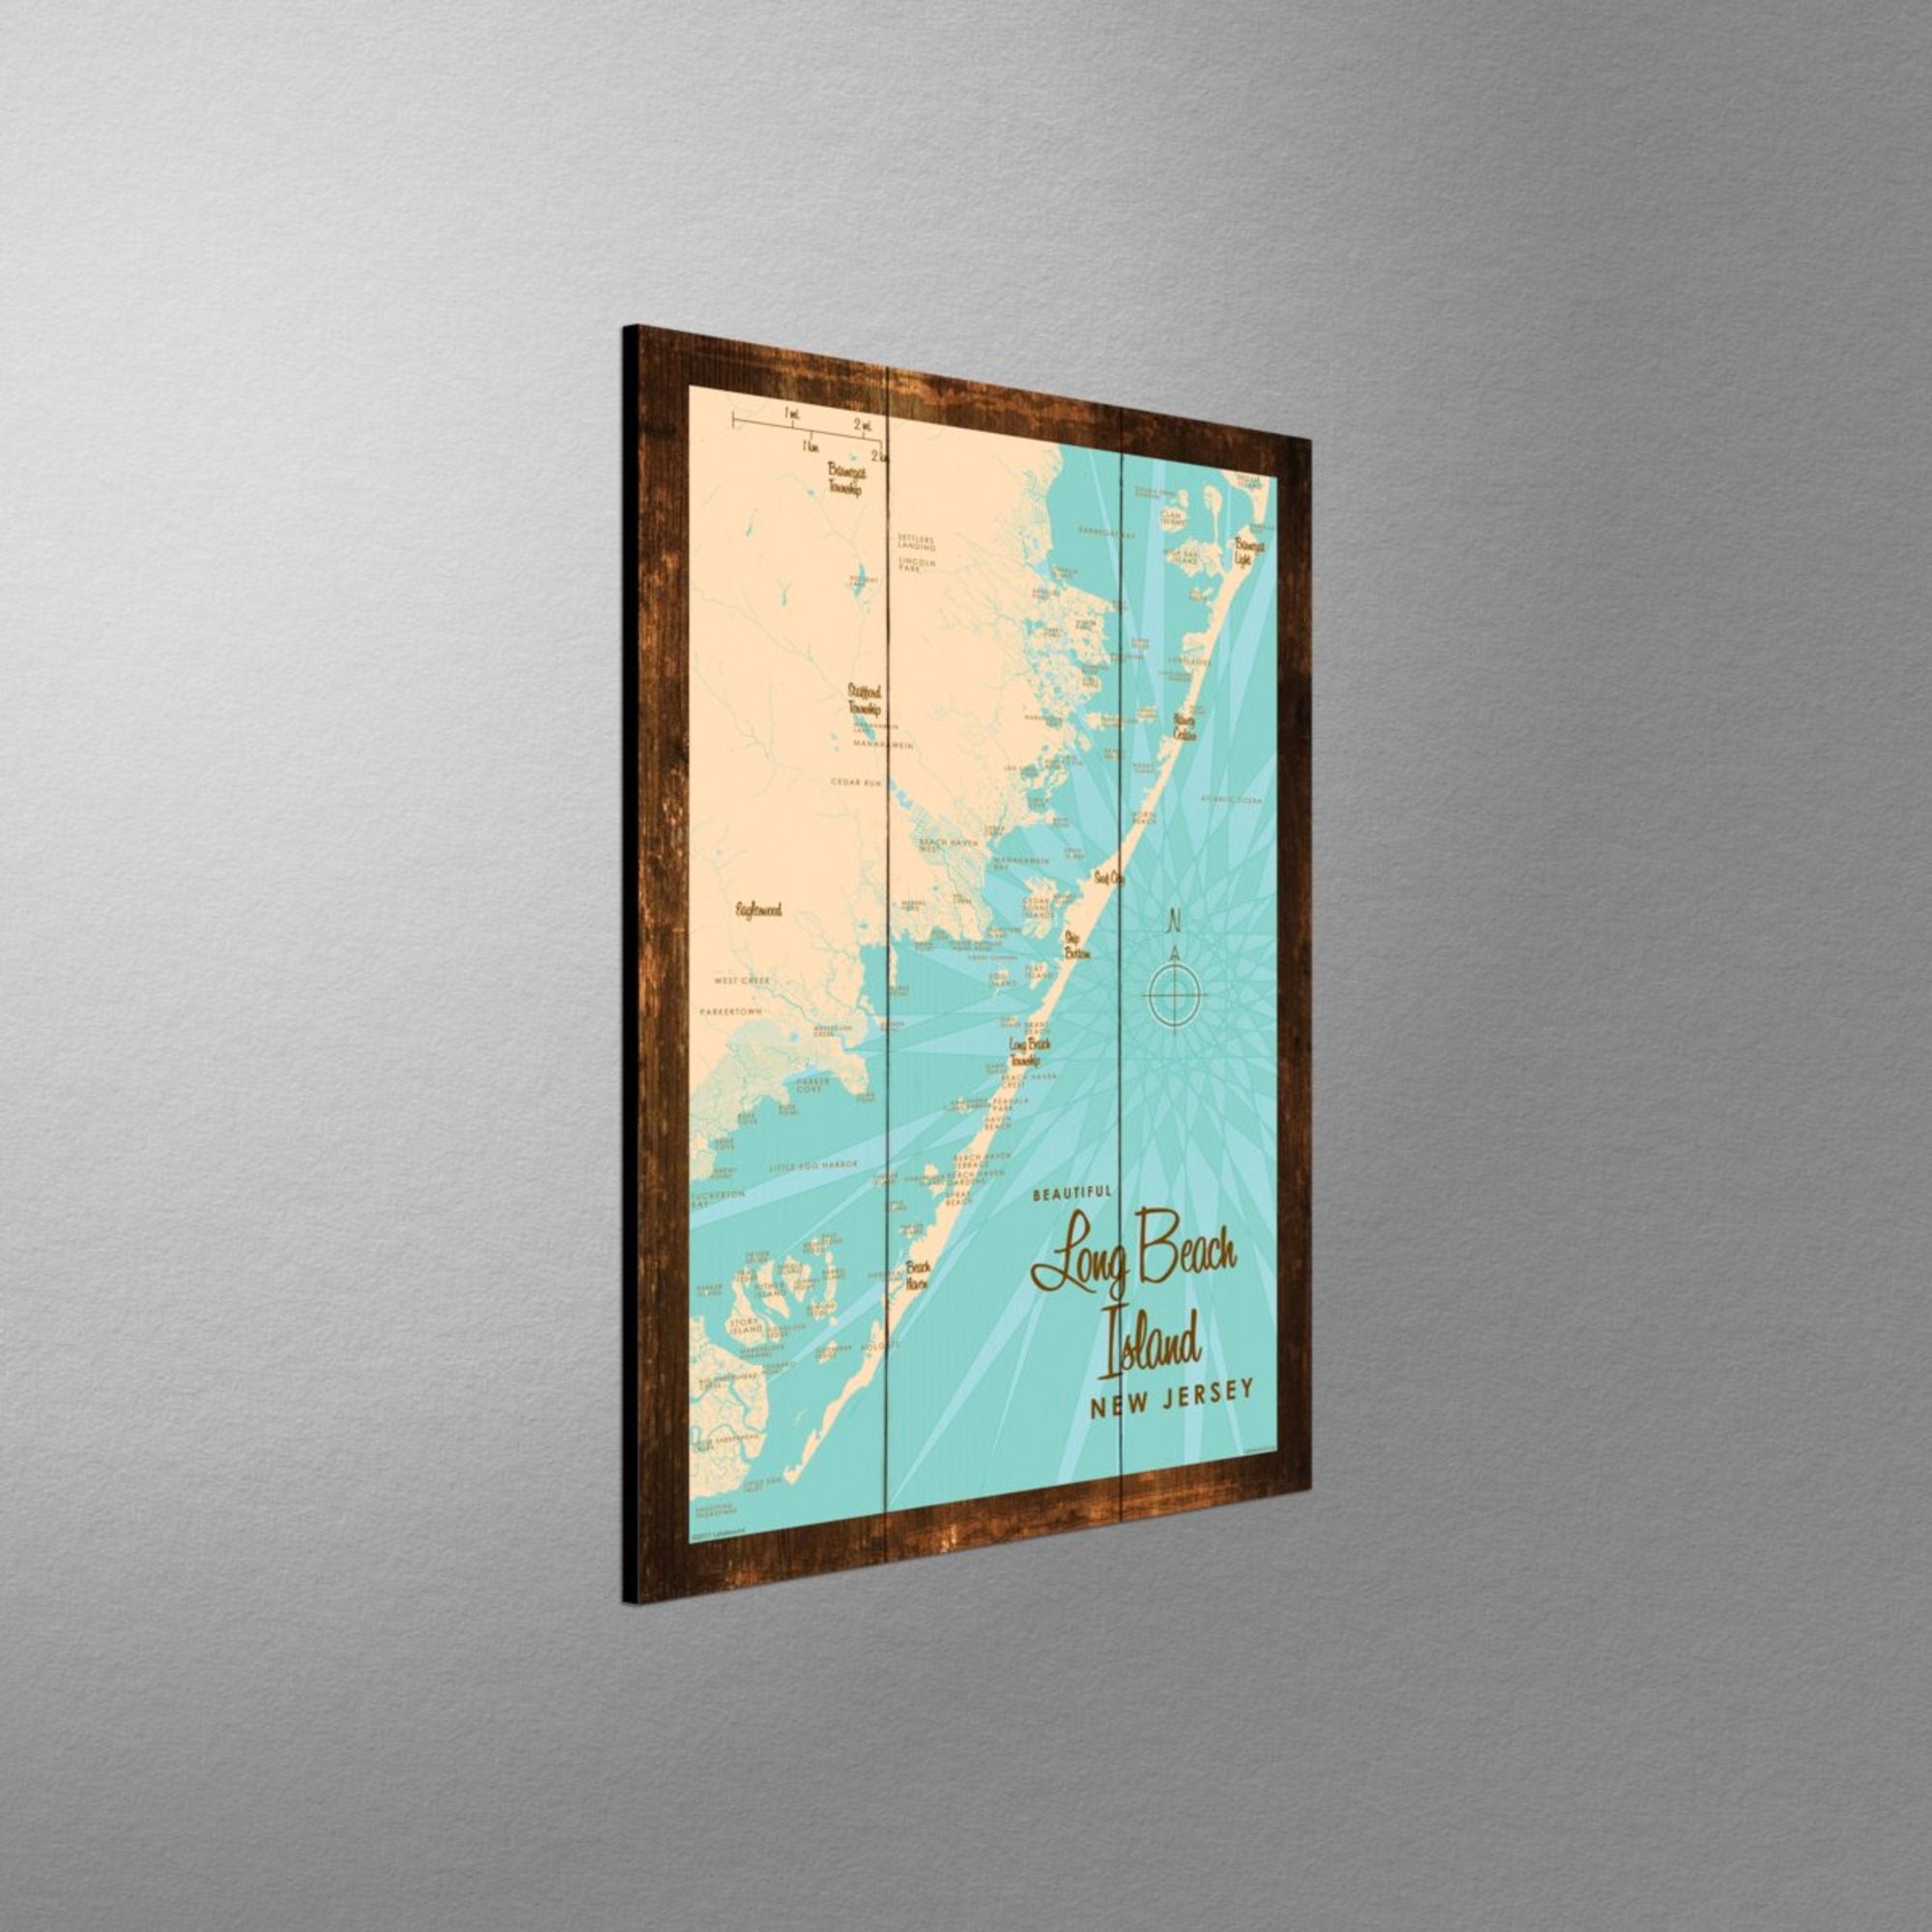 Long Beach Island, New Jersey, Rustic Wood Sign Map Art